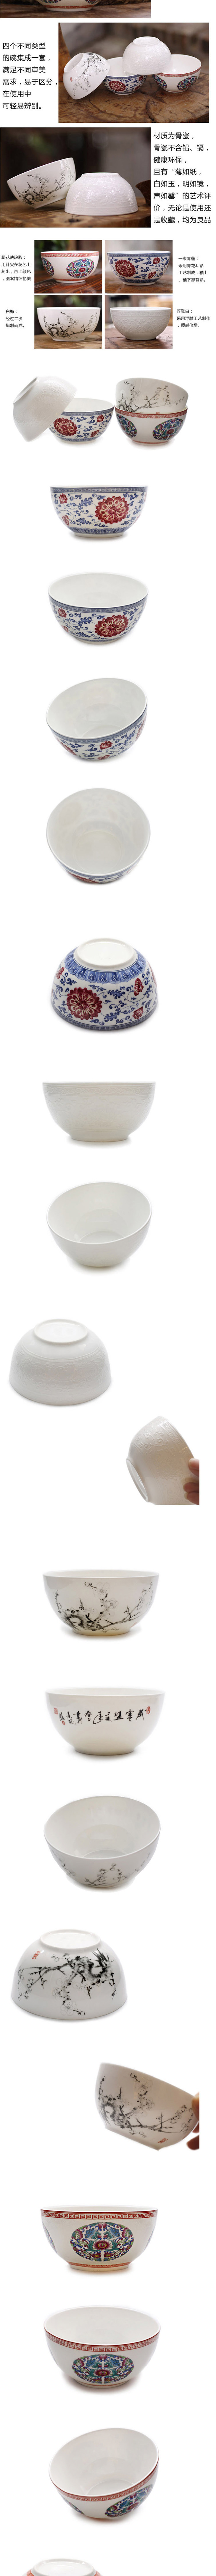 Red xin home jingdezhen porcelain bowl bucket color ipads bowls 4 pieces wedding gift set rice bowls